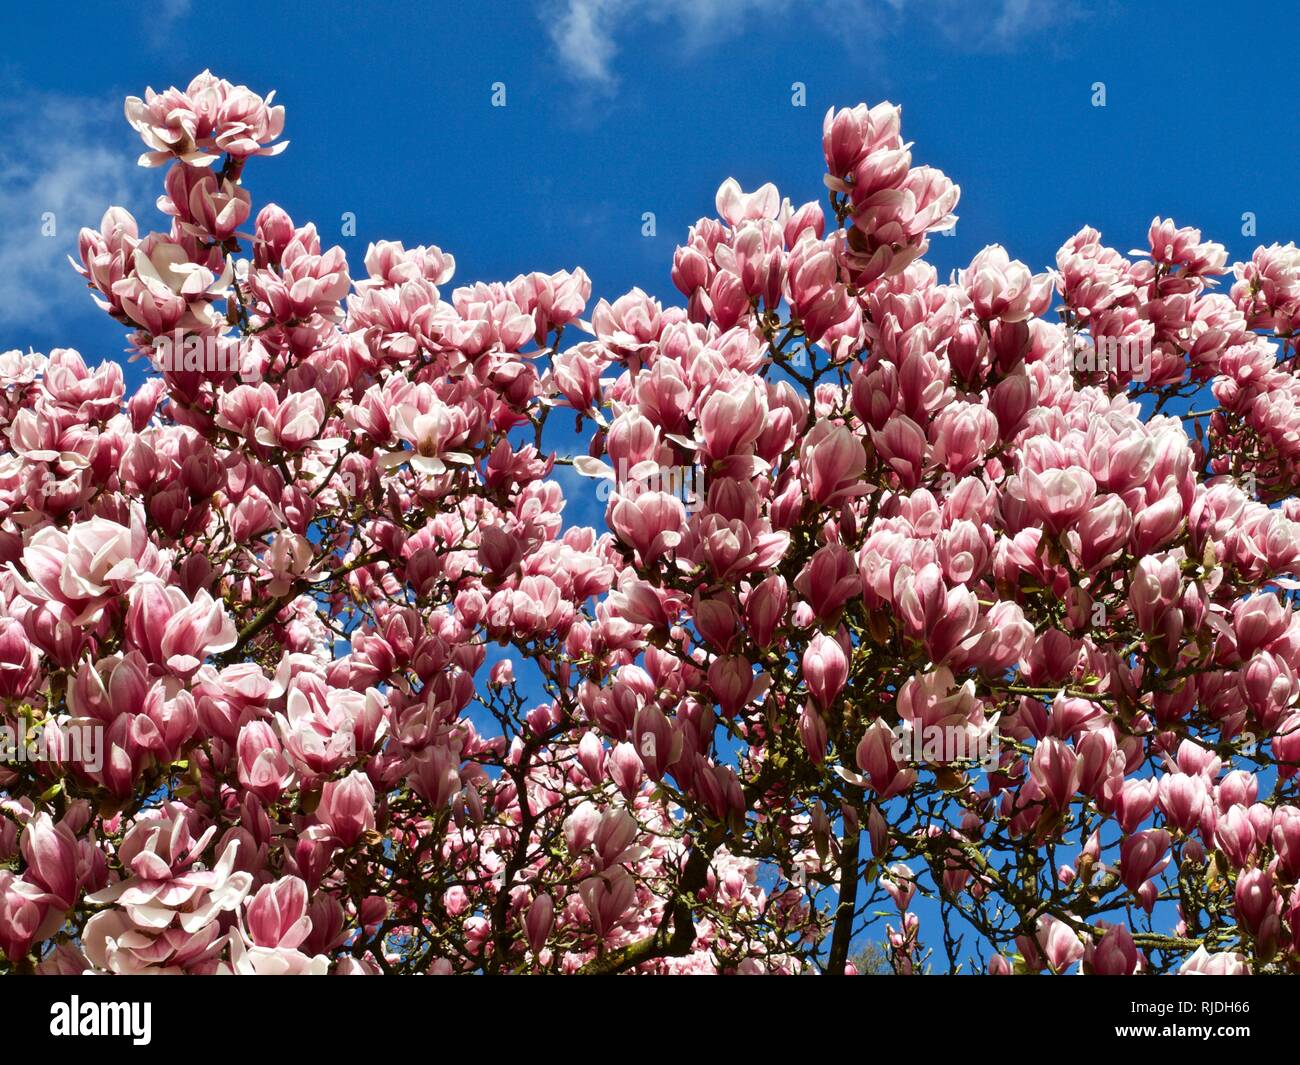 Big magnolia tree blooming full of pink magnolia blossoms Stock Photo